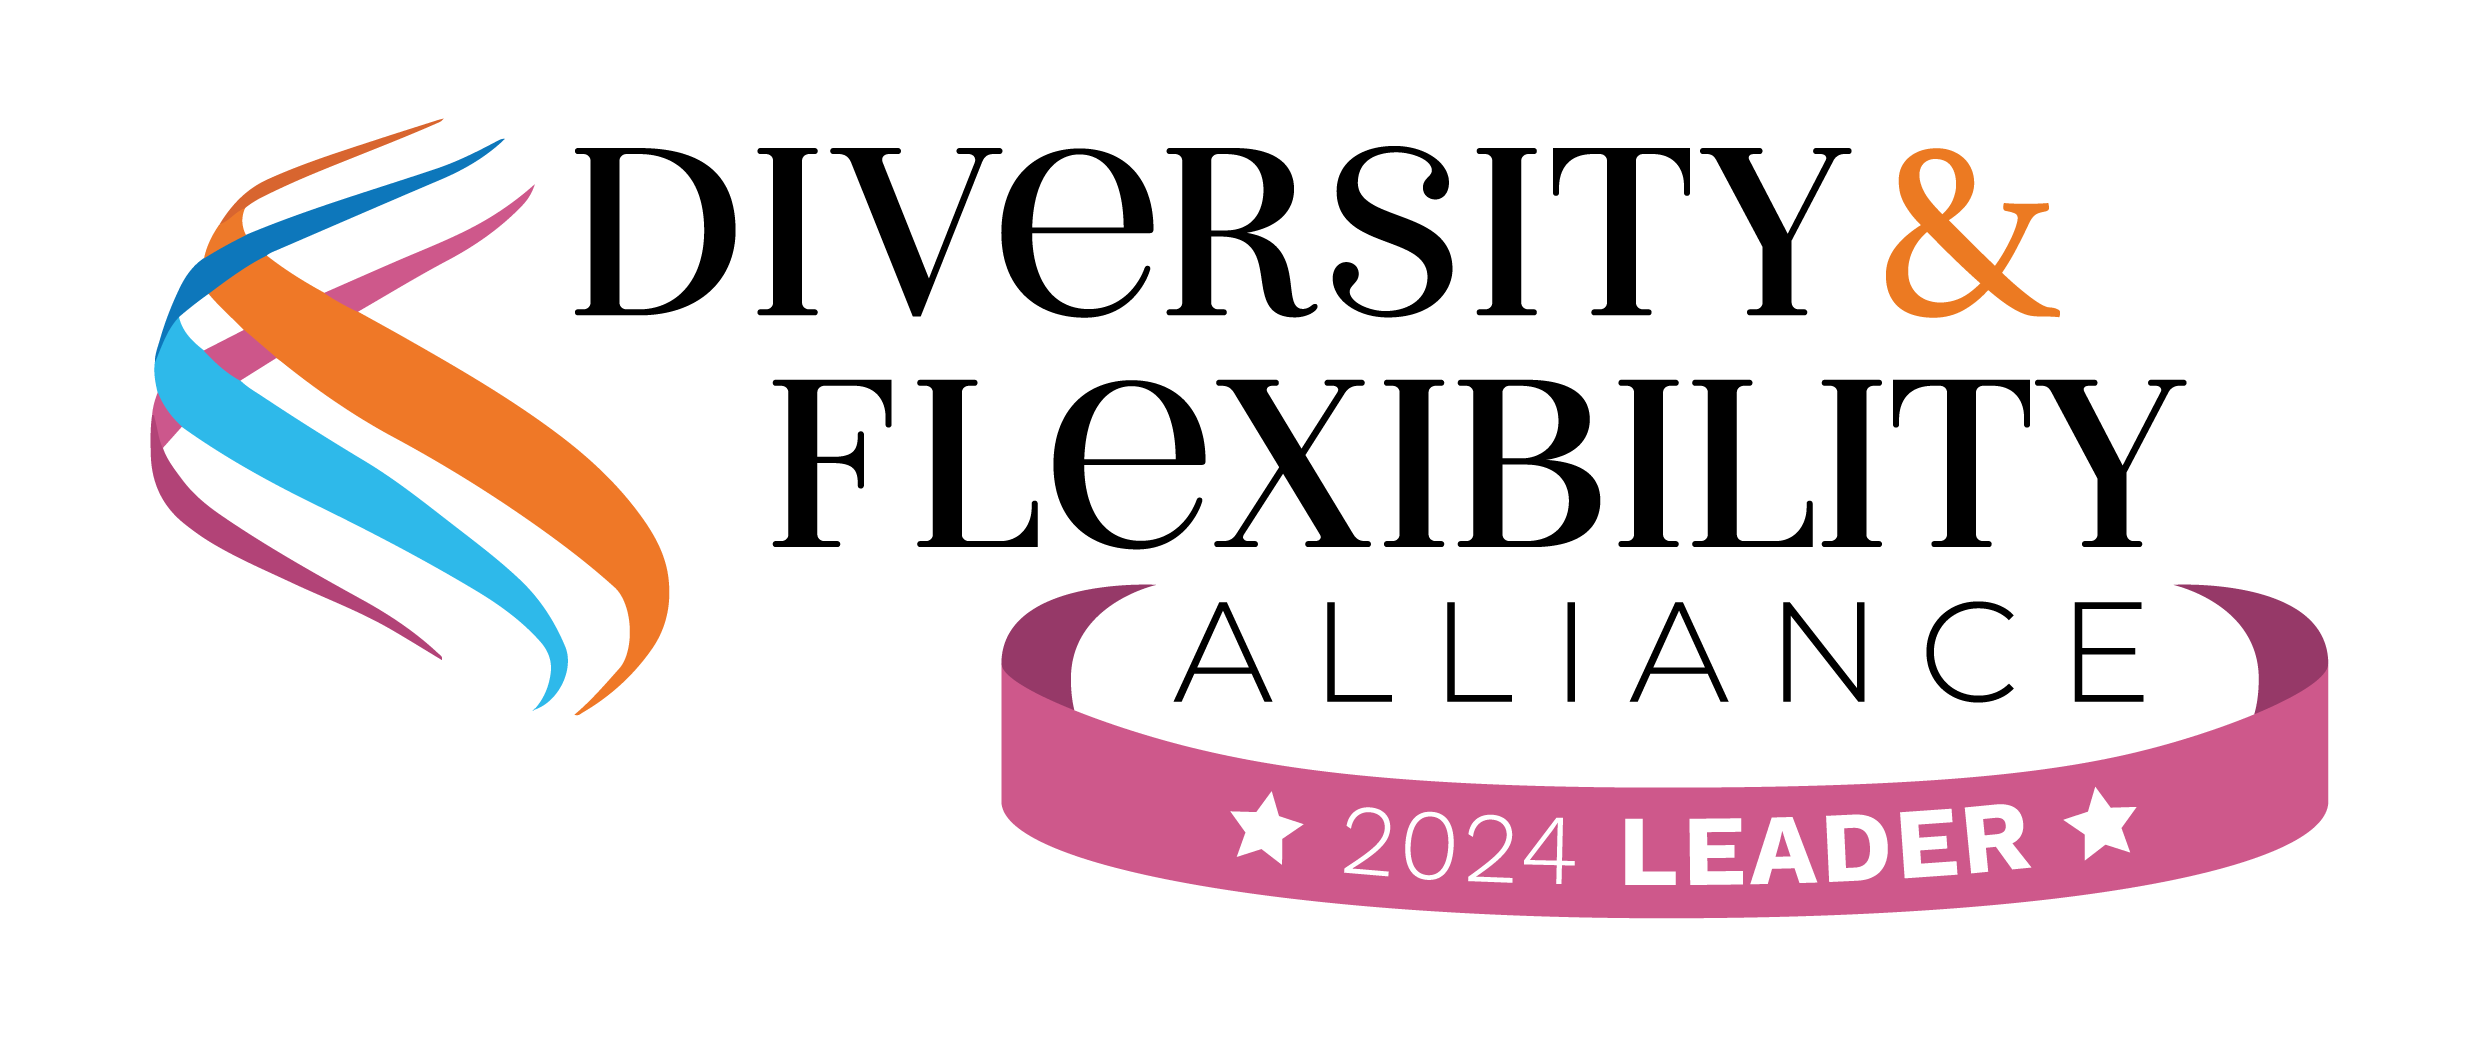 Diversity & Flexibility Alliance 2024 Leader Logo